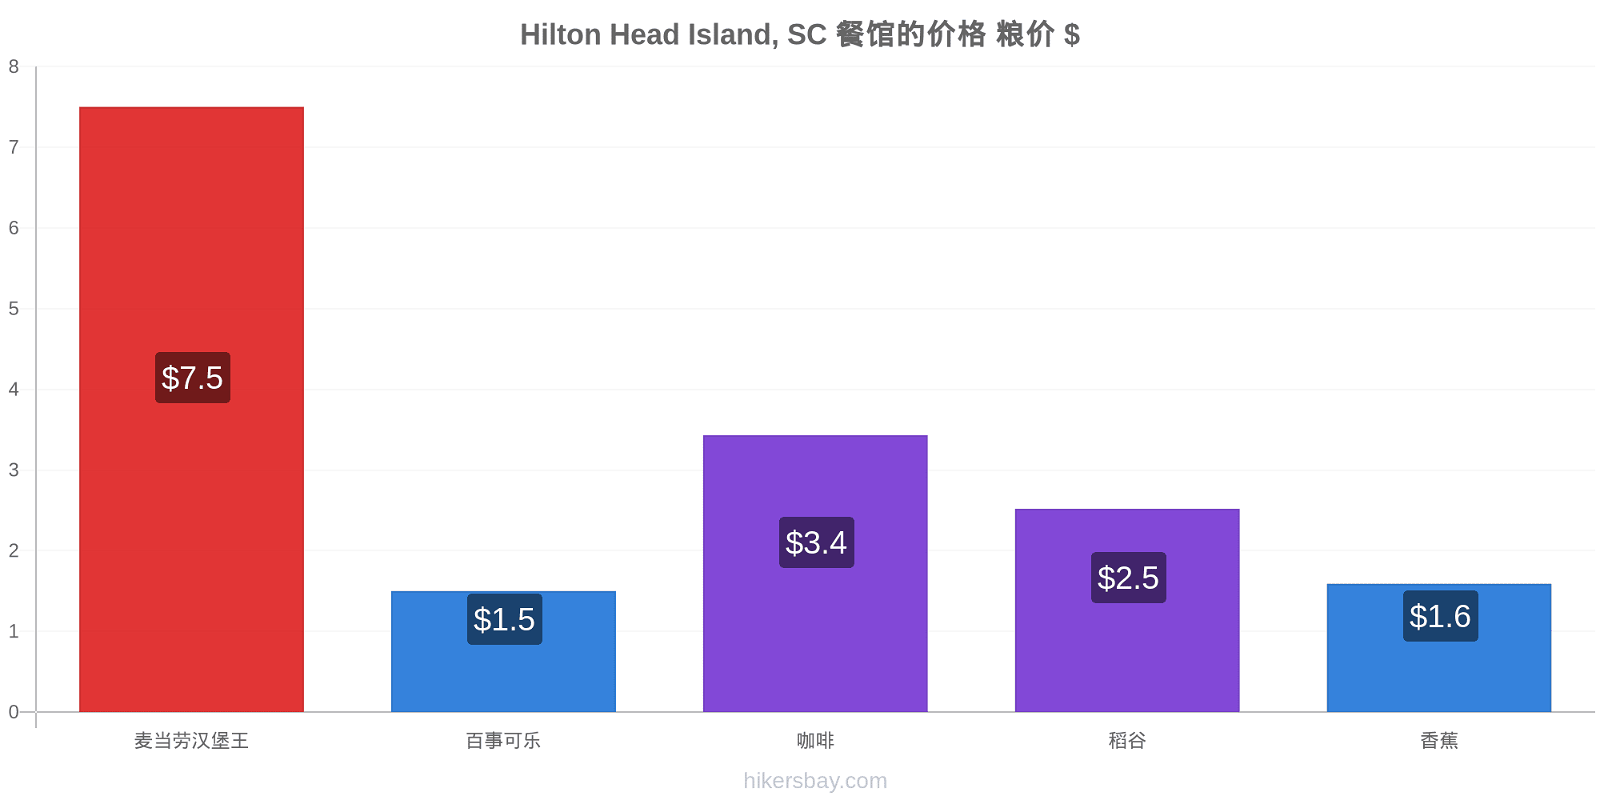 Hilton Head Island, SC 价格变动 hikersbay.com